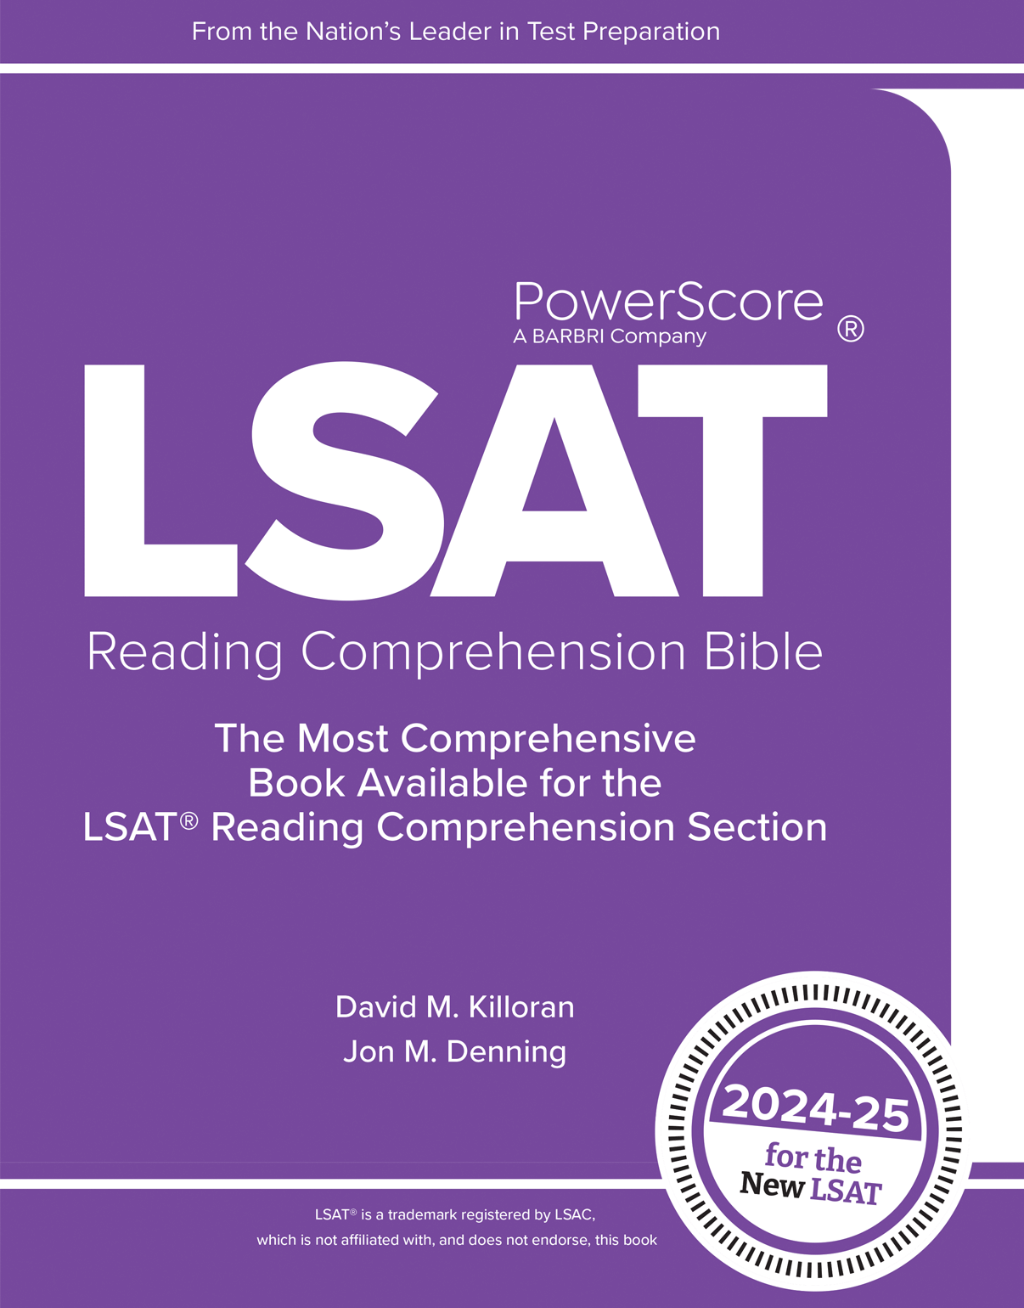 LSAT Reading Comprehension Bible cover